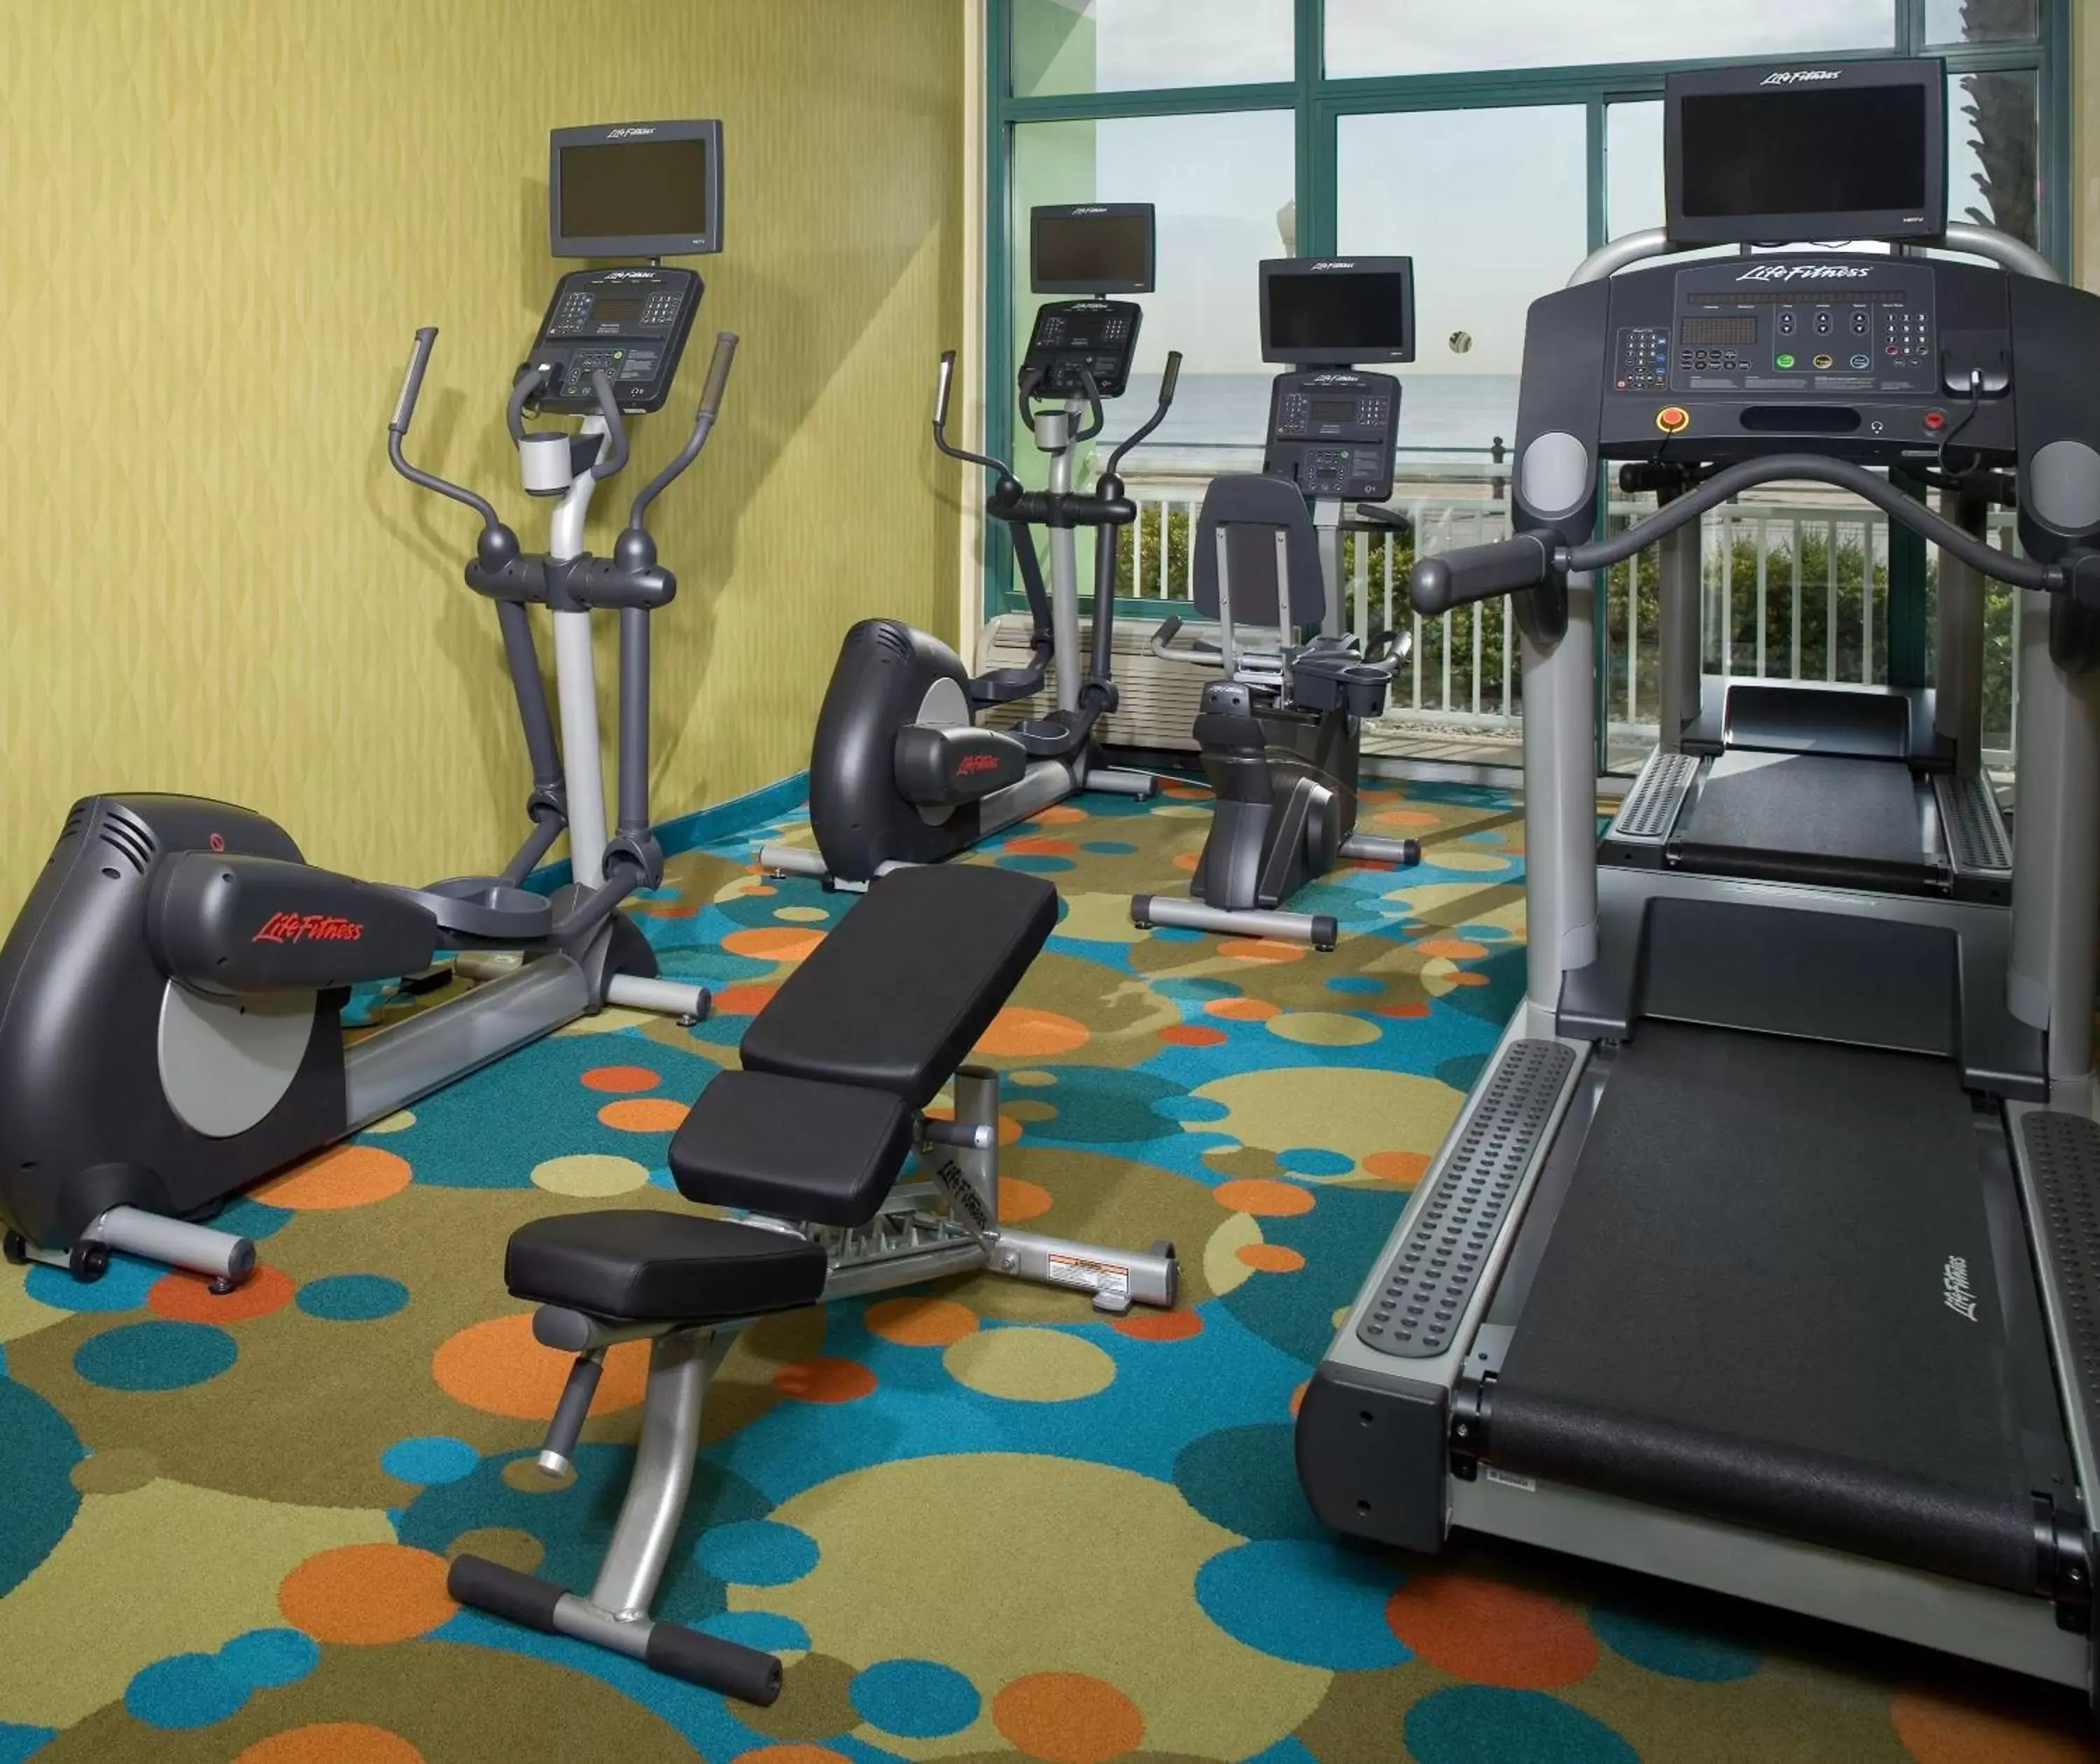 Fitness centre/facilities, Fitness Center/Facilities in Holiday Inn Va Beach-Oceanside 21st St, an IHG Hotel